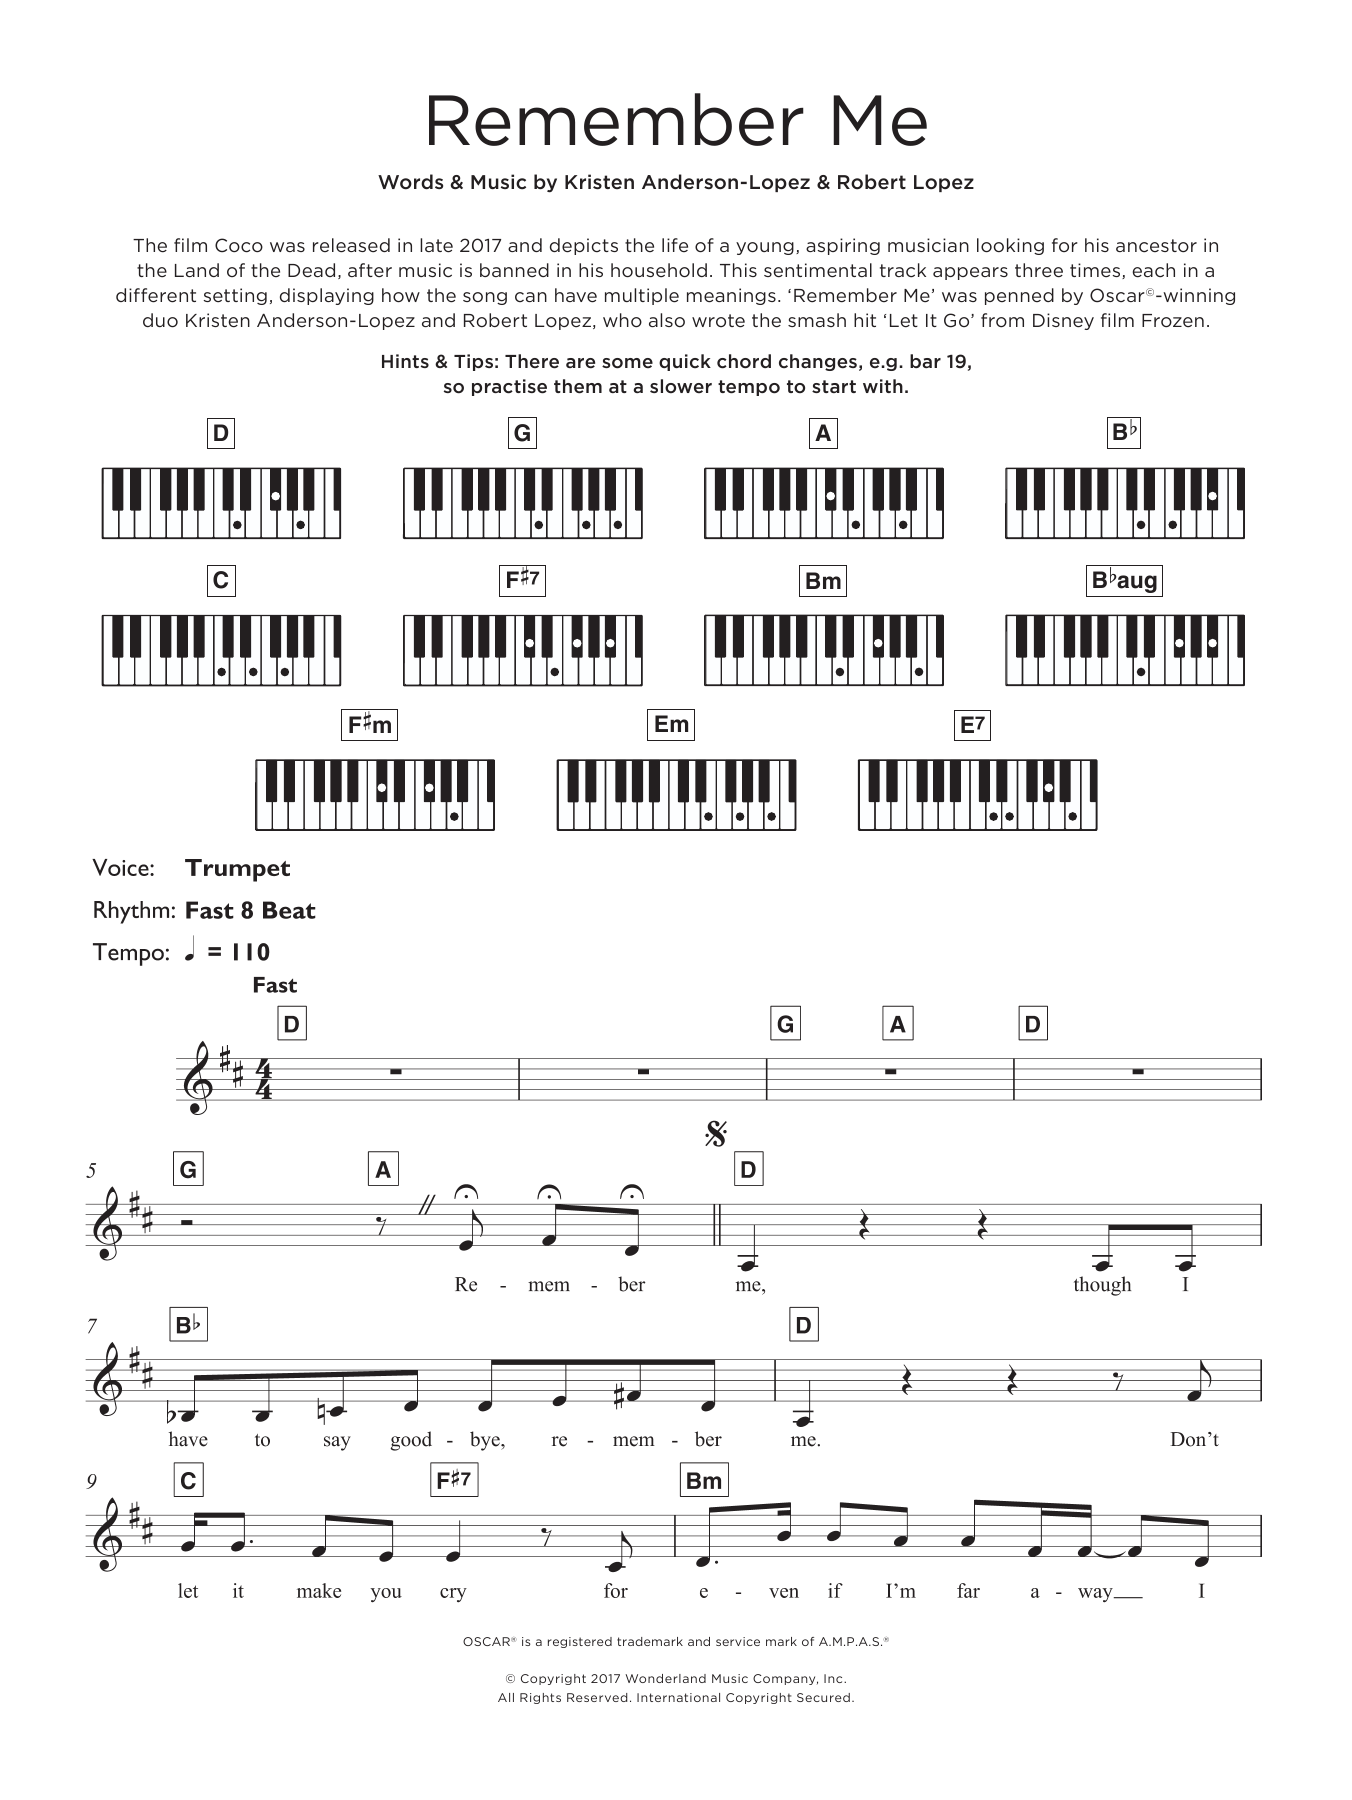 Kristen Anderson-Lopez & Robert Lopez Remember Me (Ernesto de la Cruz) (from Coco) Sheet Music Notes & Chords for 5-Finger Piano - Download or Print PDF